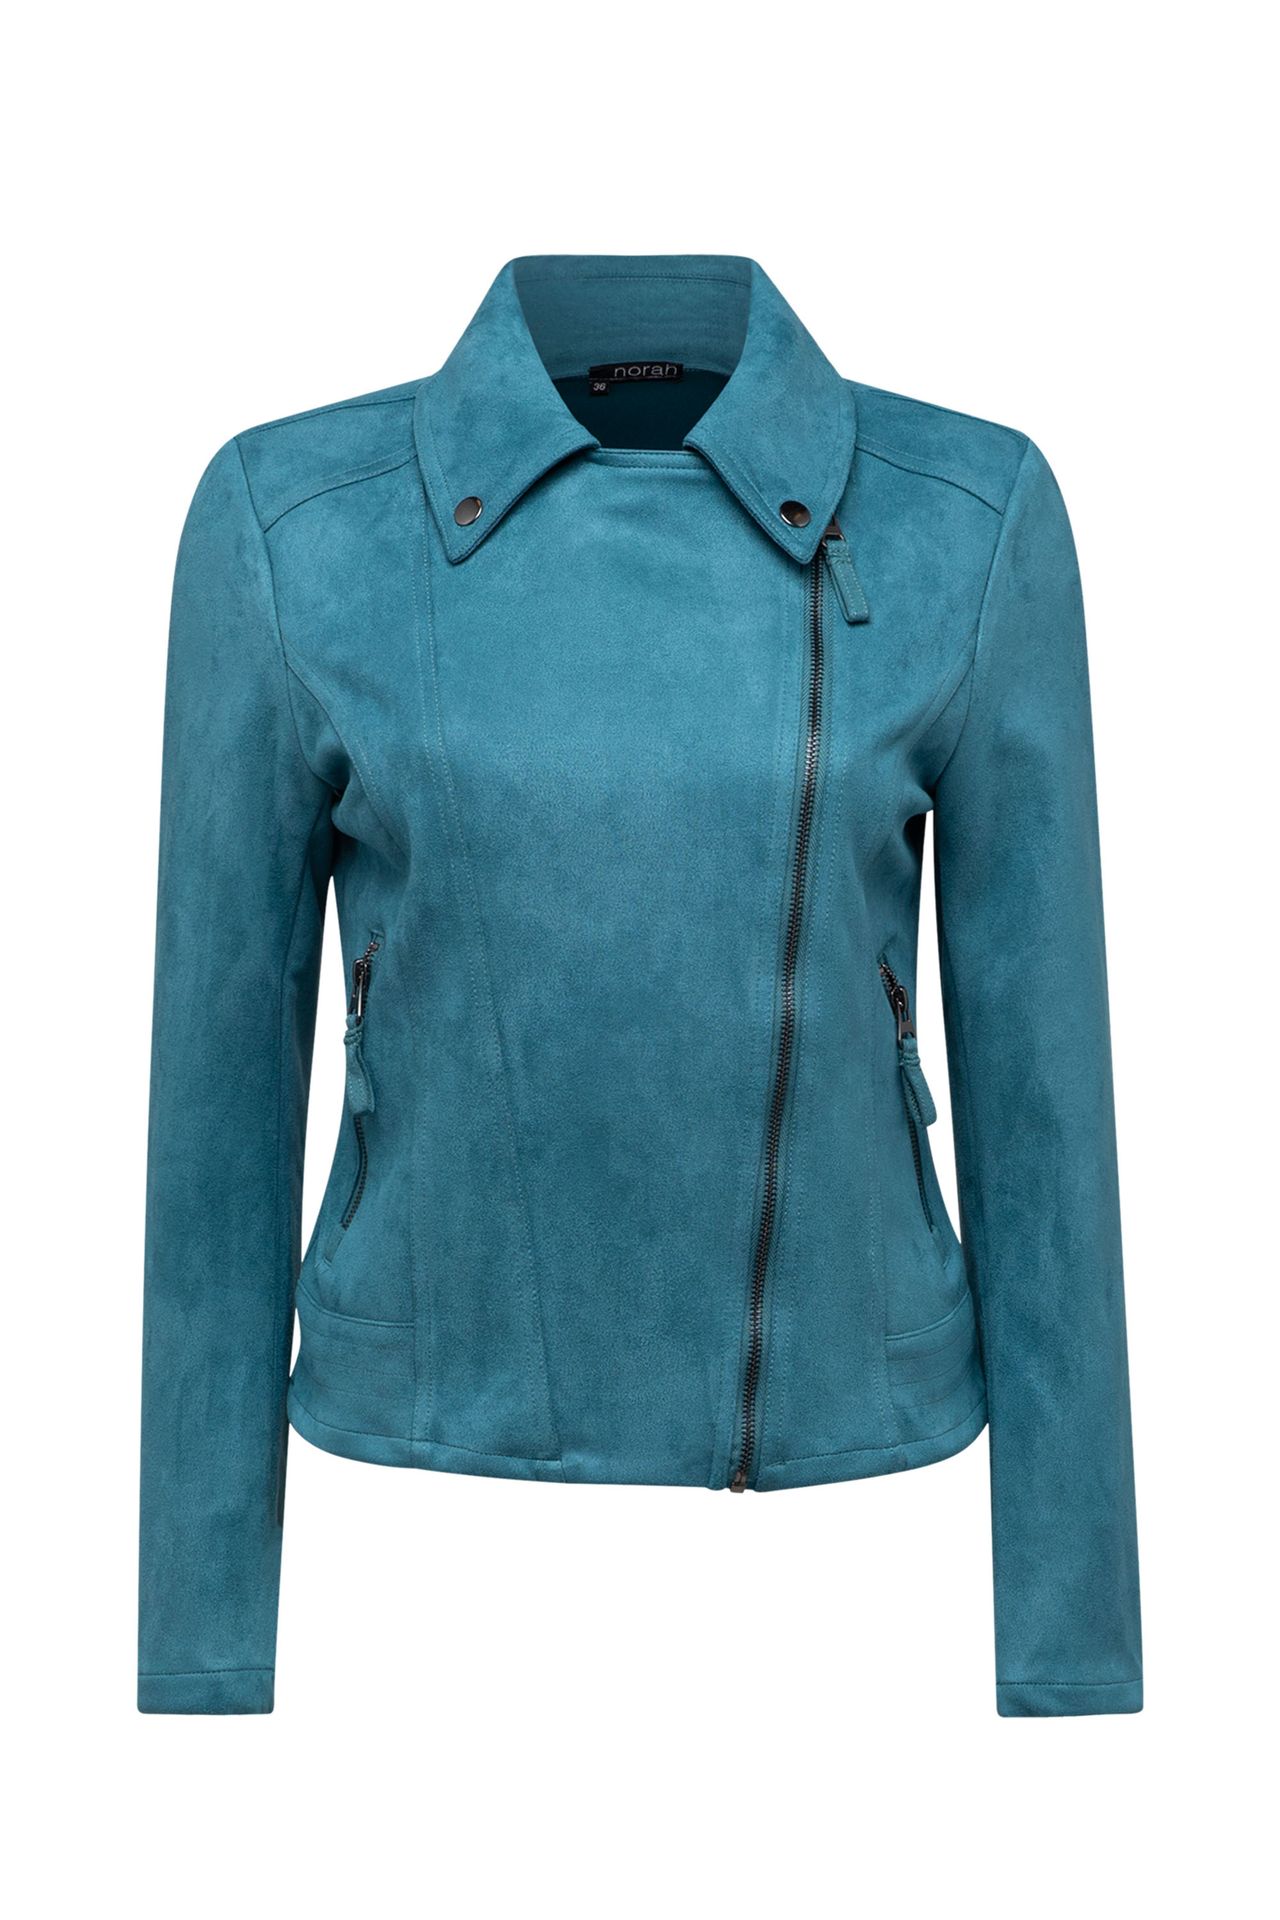 Norah Jacket blauw blue 212163-400